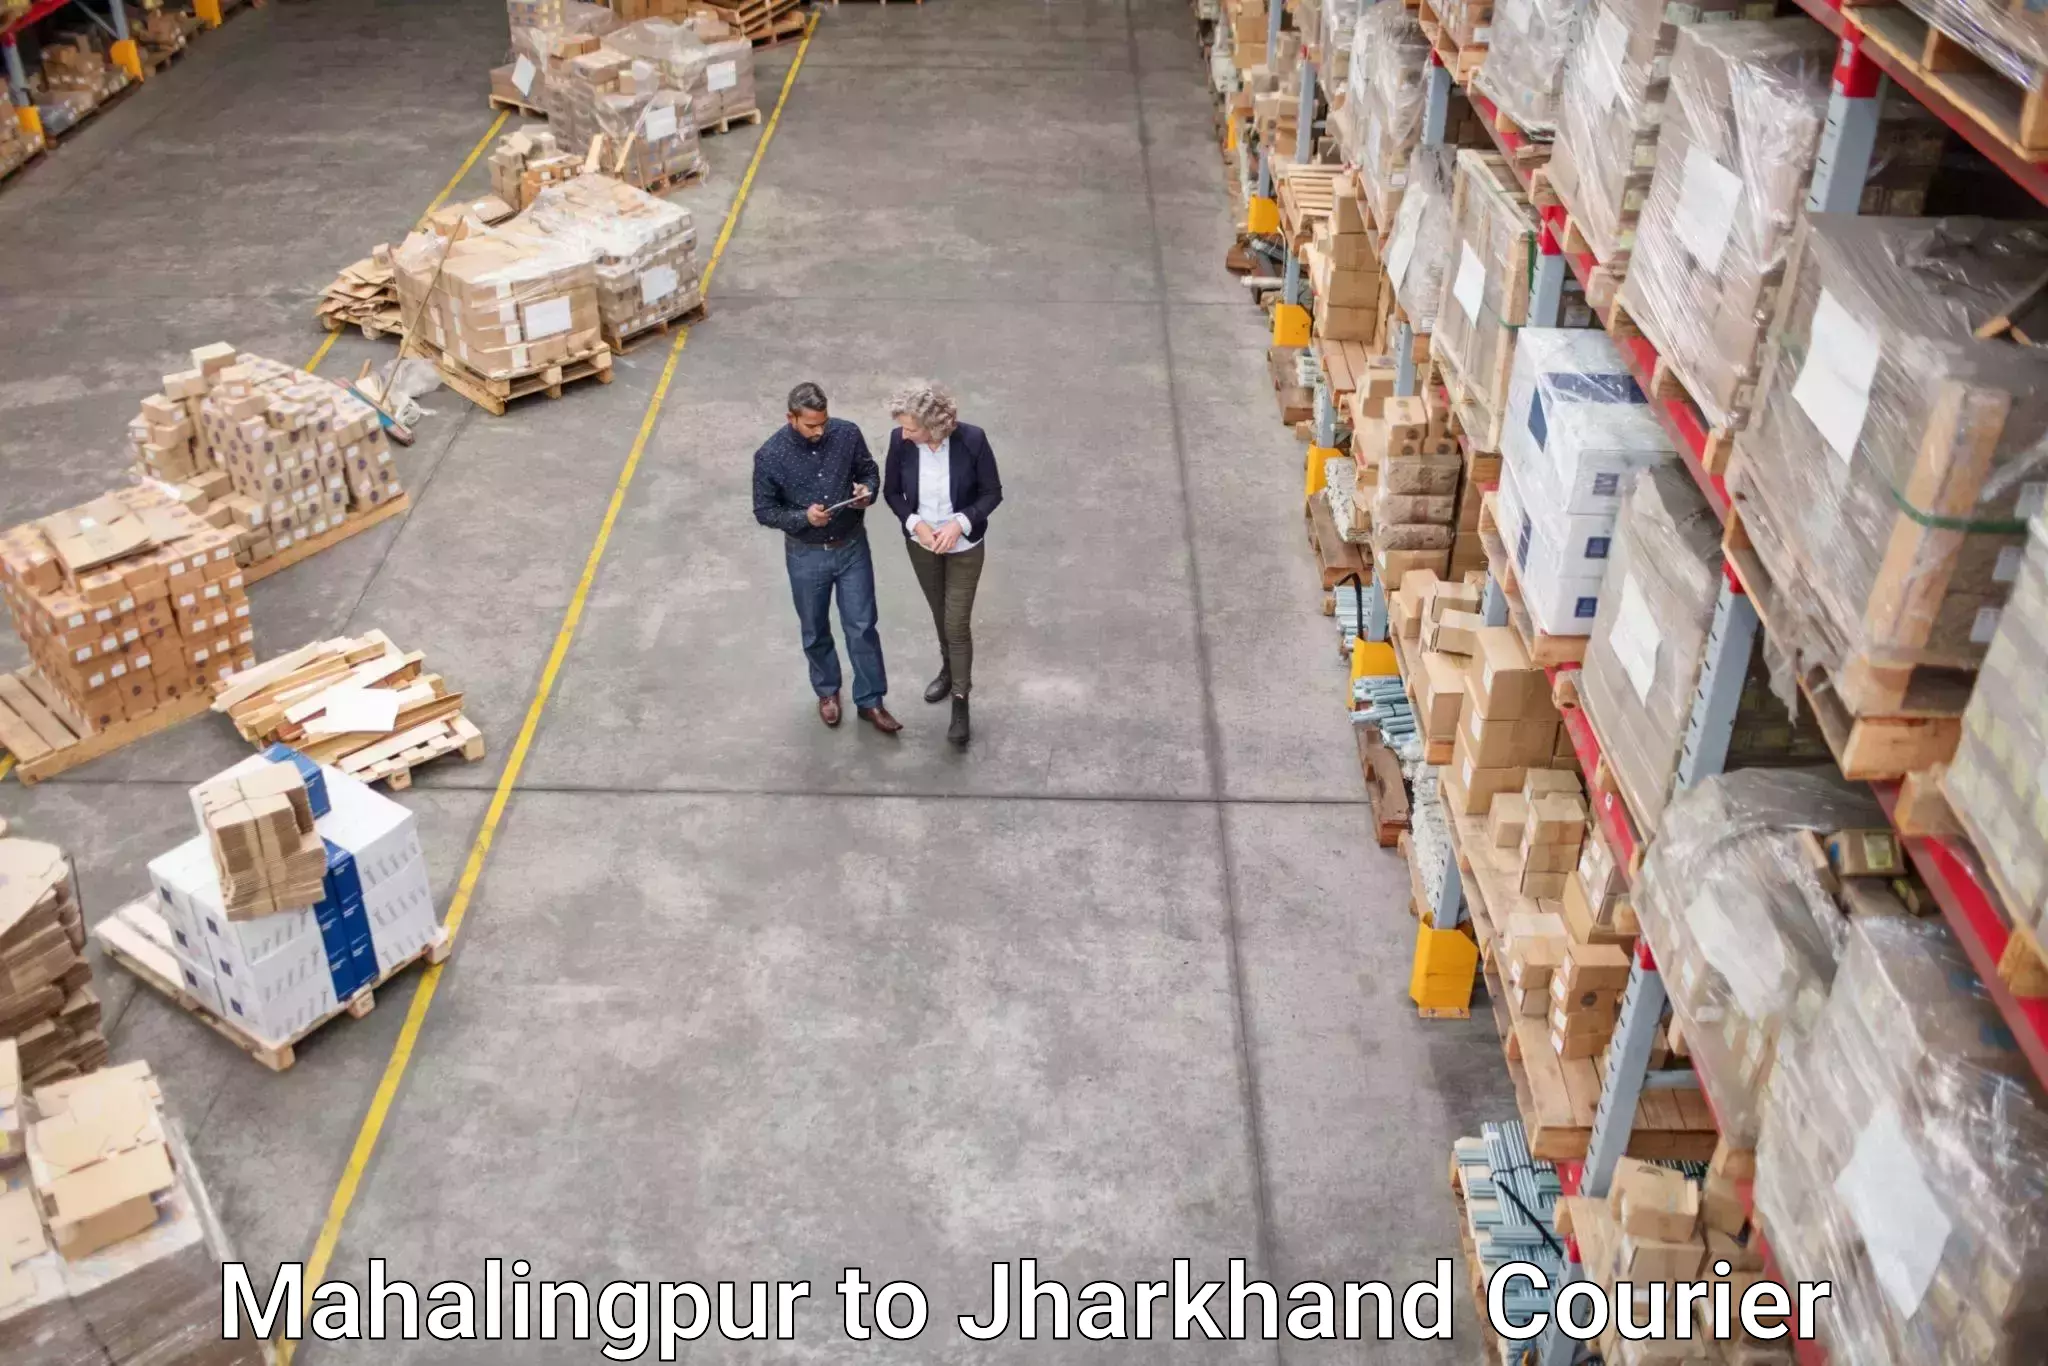 Global logistics network Mahalingpur to Jharkhand